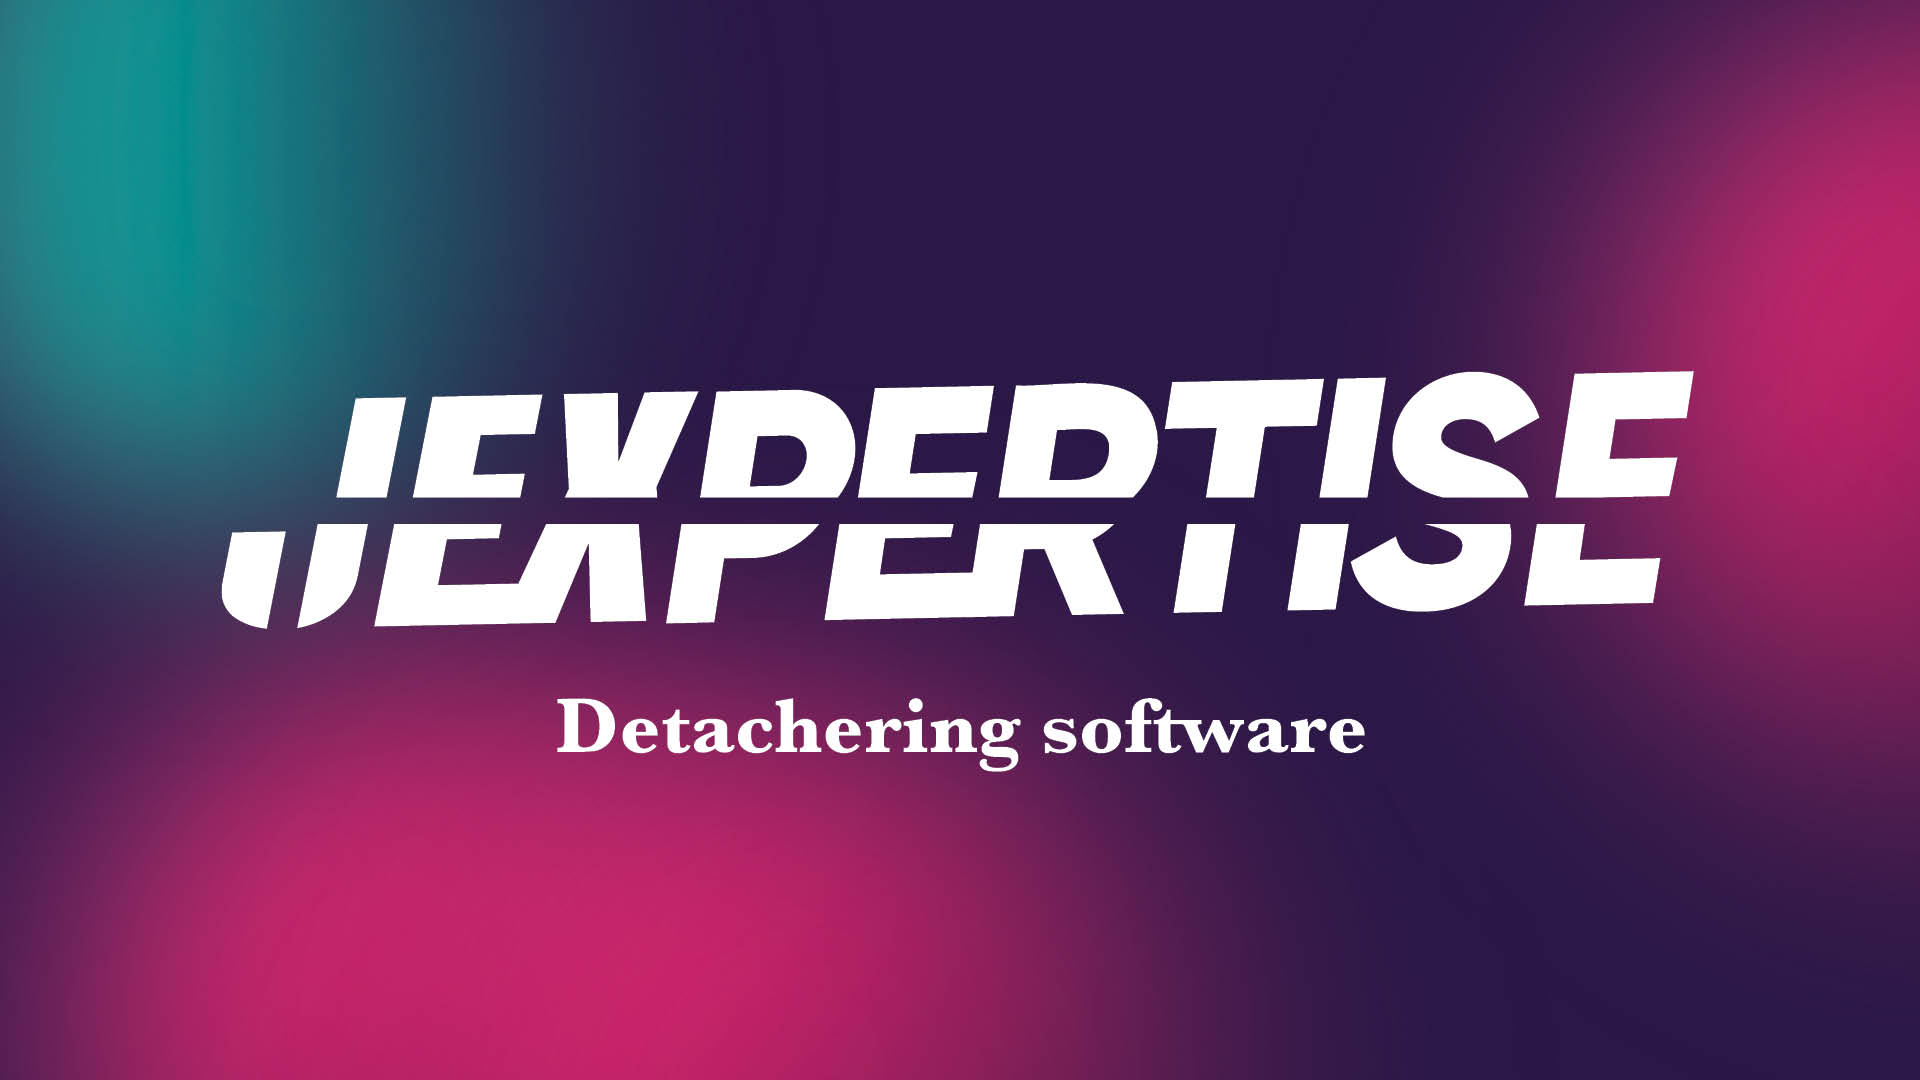 Jexpertise_Detachering software_artikel header